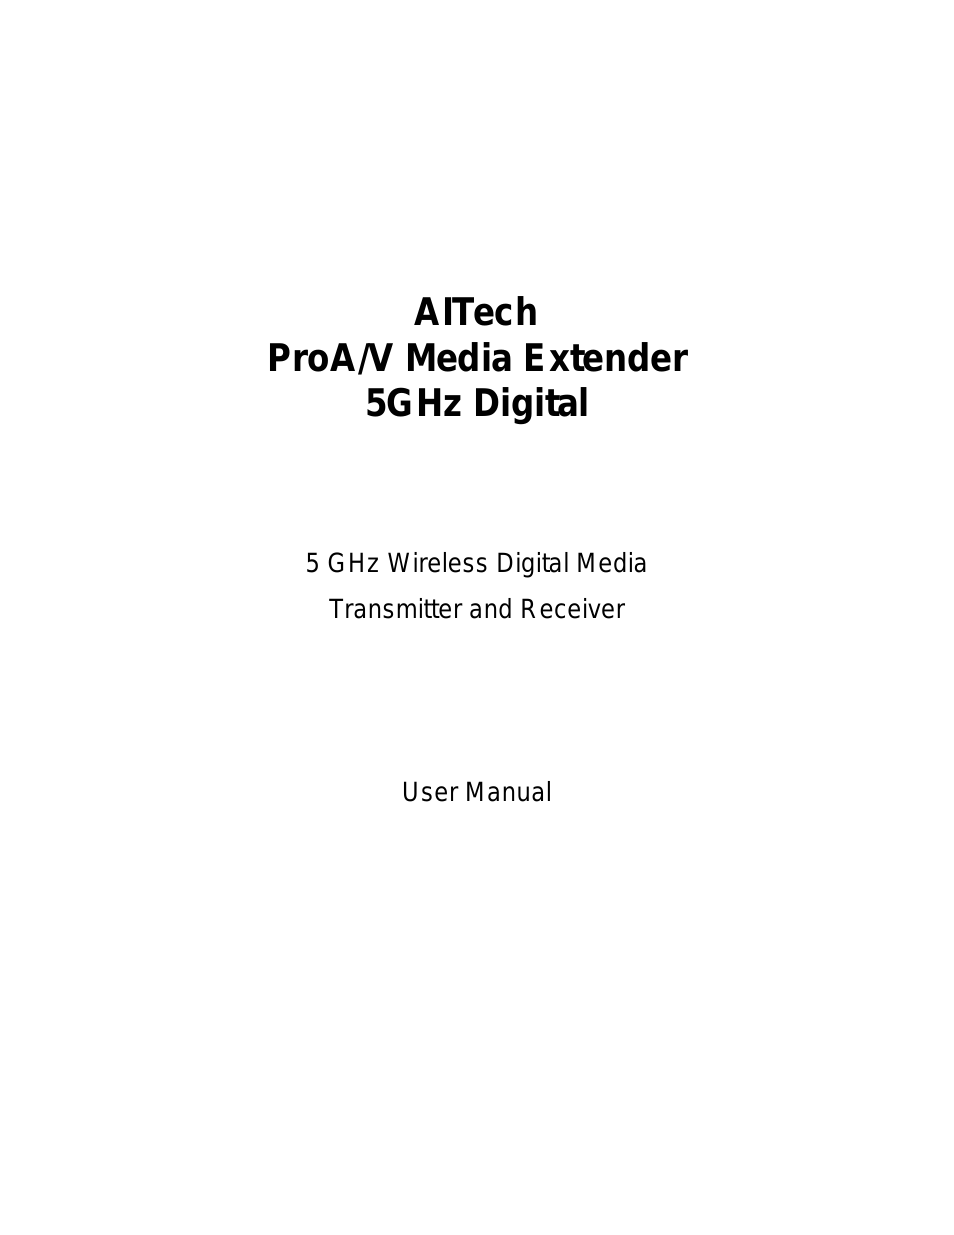 ProA/V Media Extender - 5GHz Digital